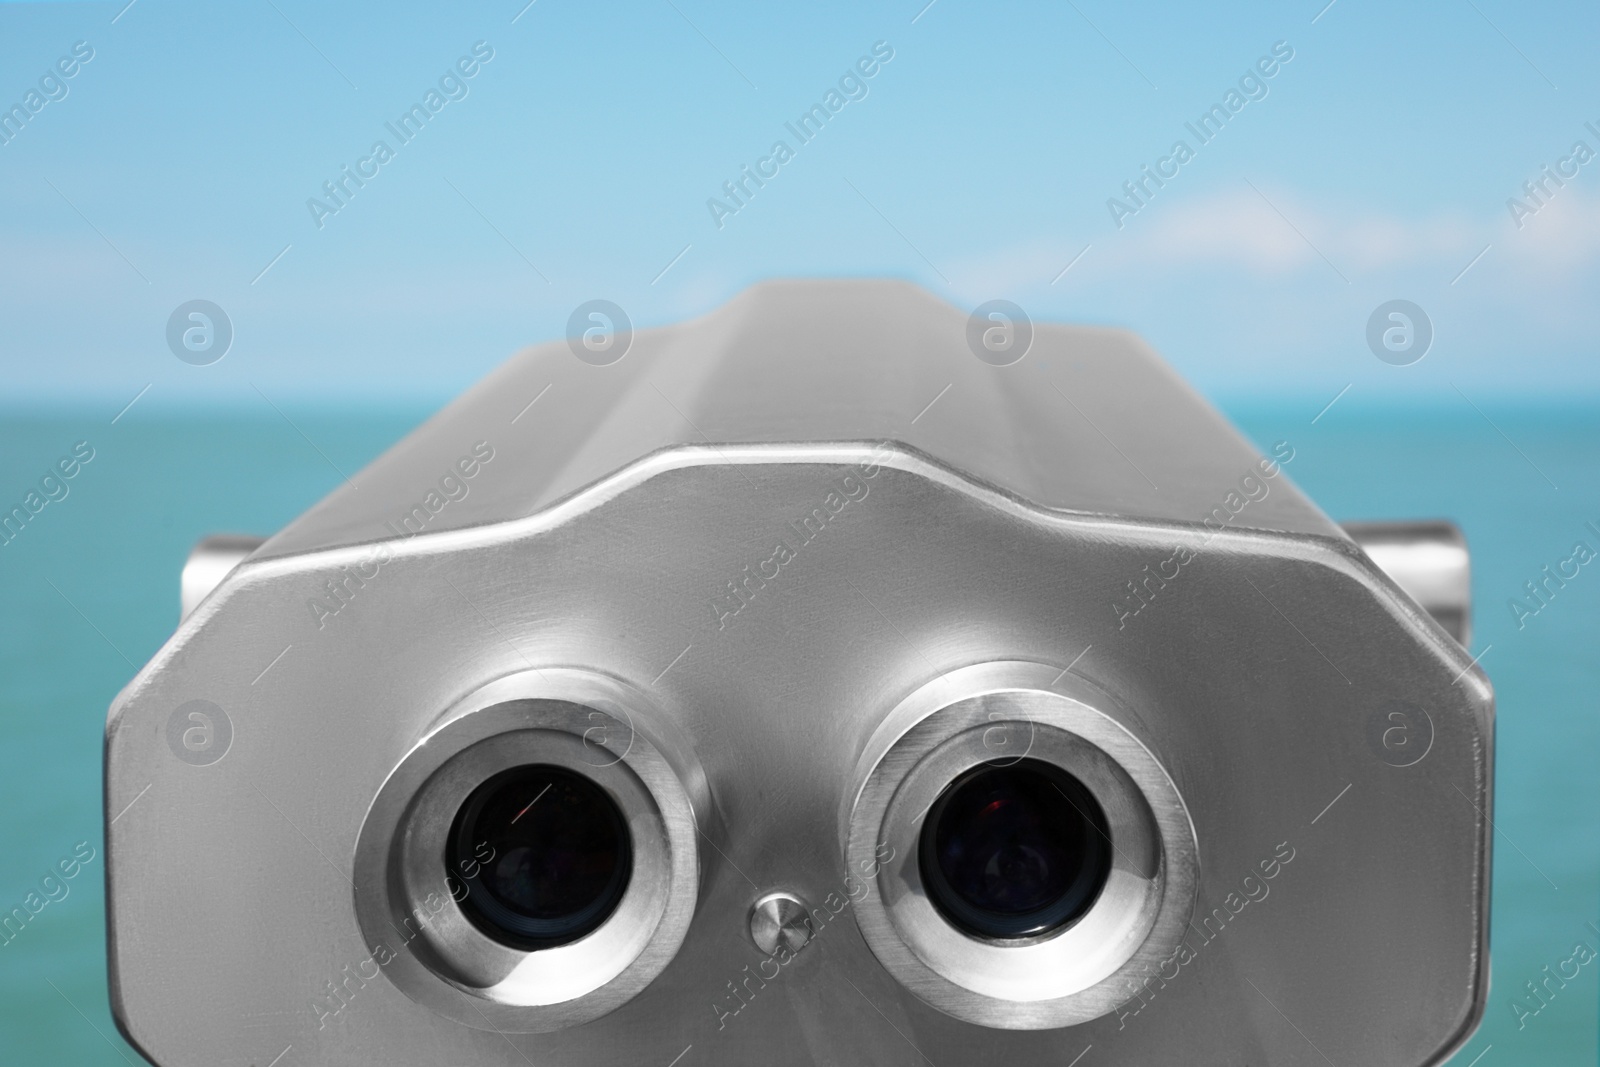 Photo of Metal tower viewer installed near sea, closeup. Mounted binoculars